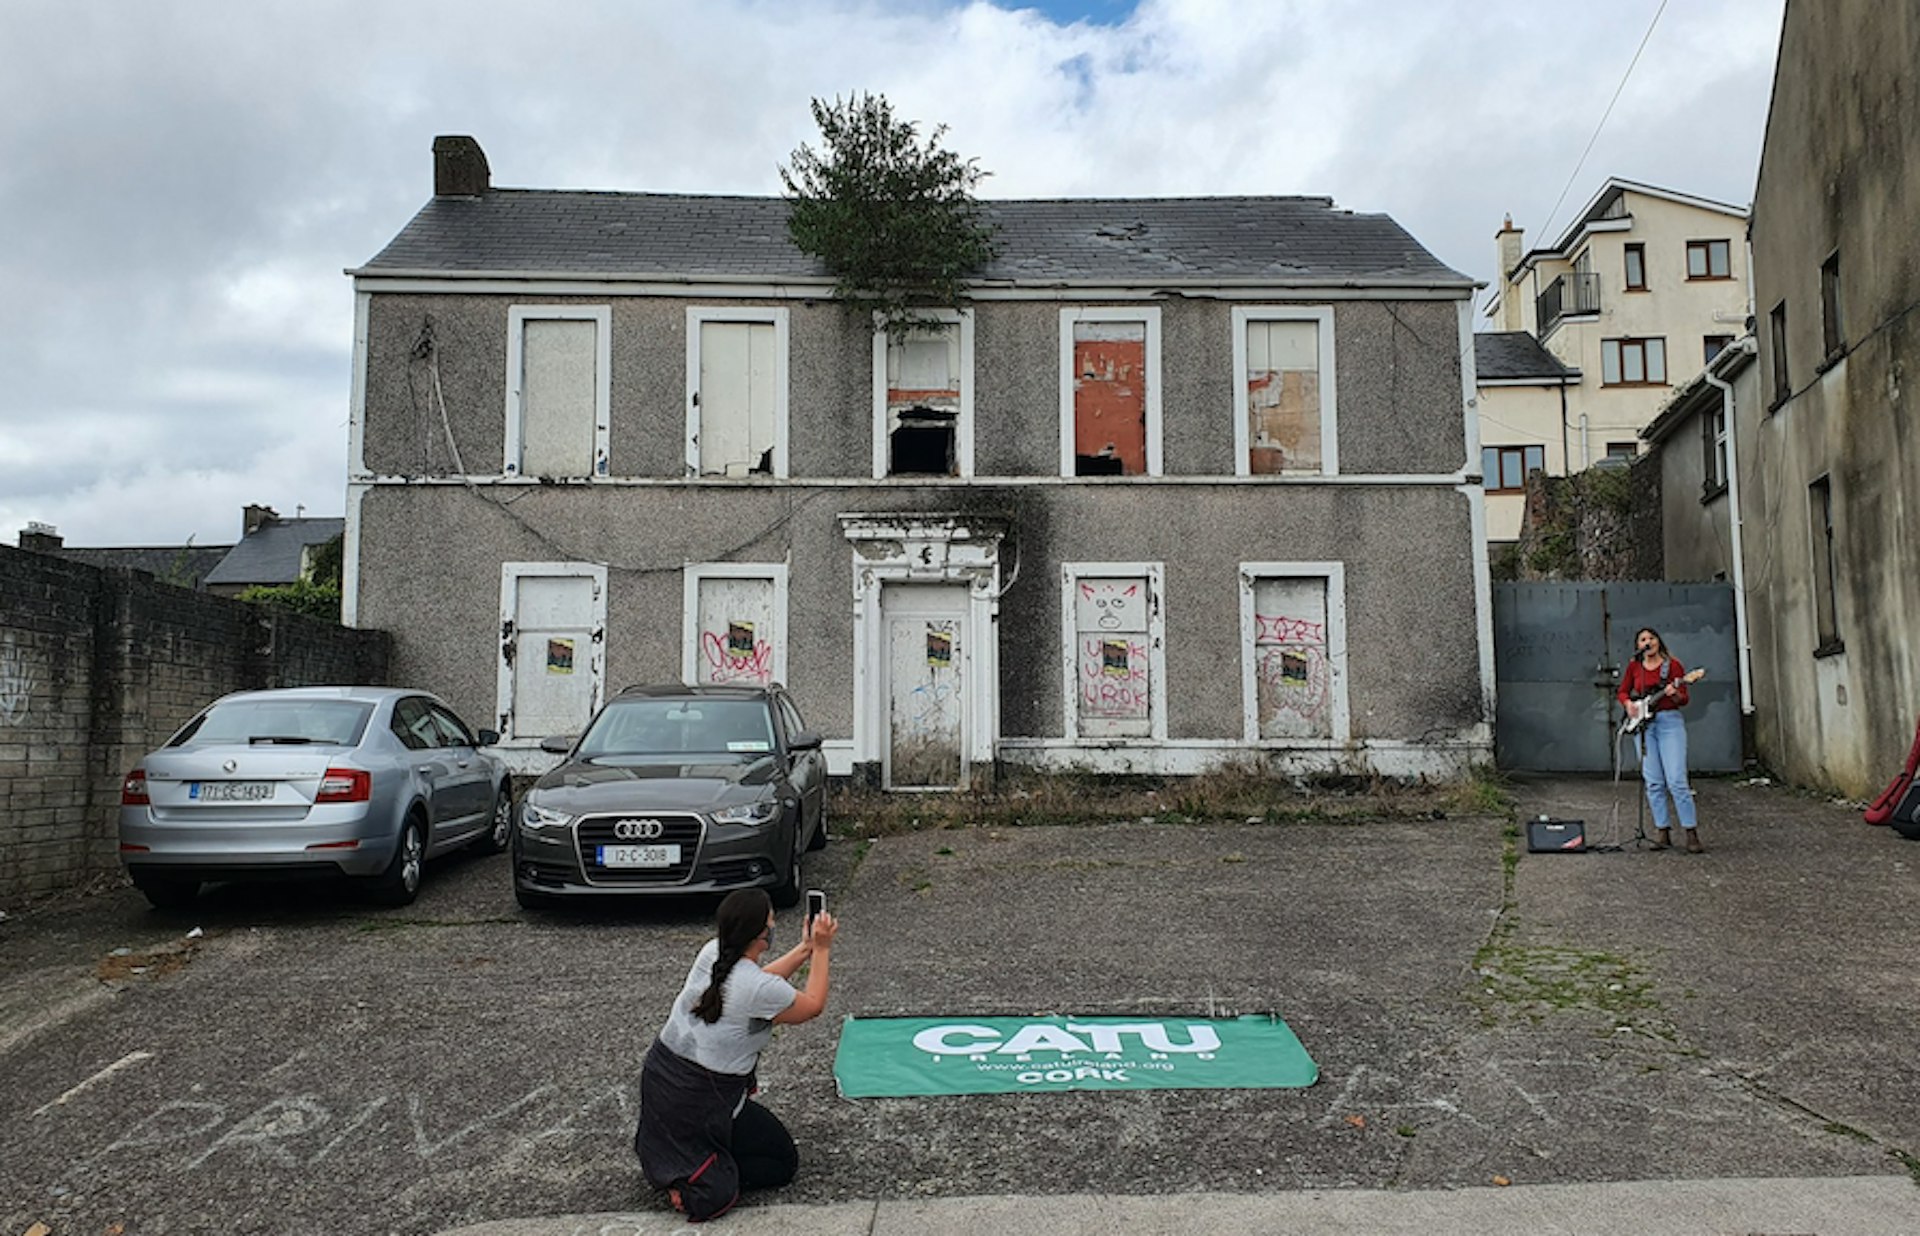 The activist group taking on the Irish housing crisis